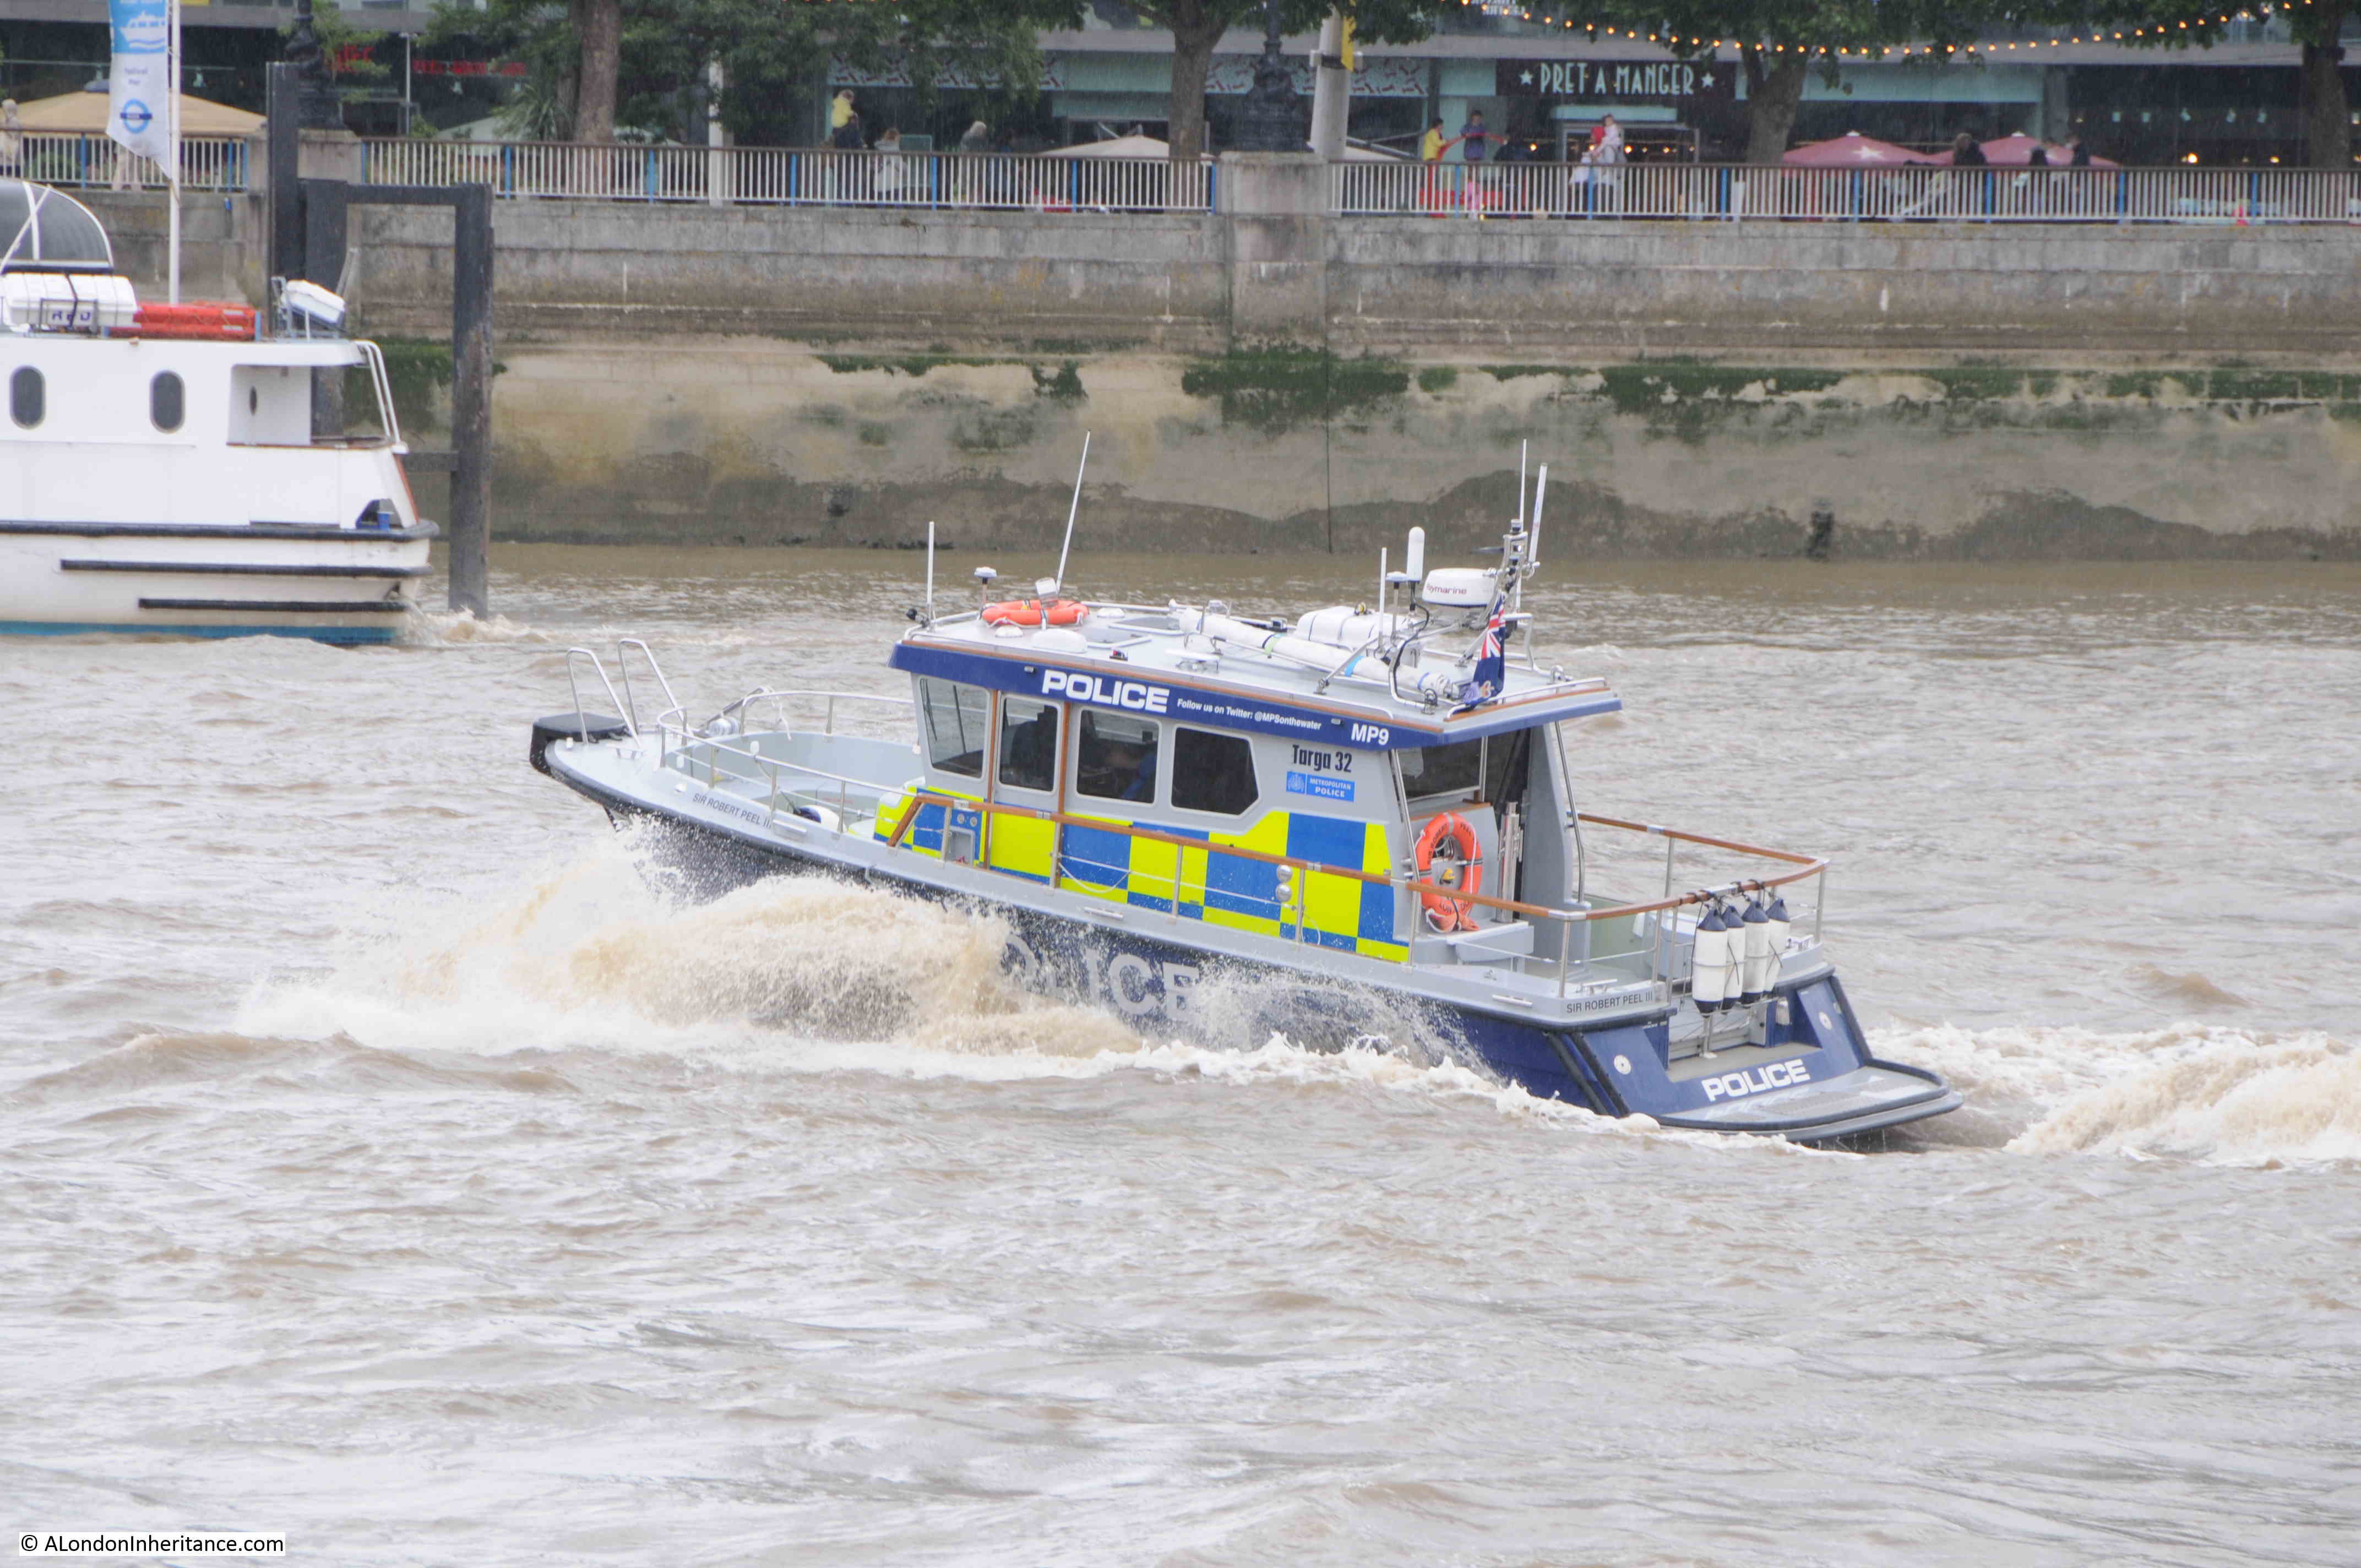 Thames River Police